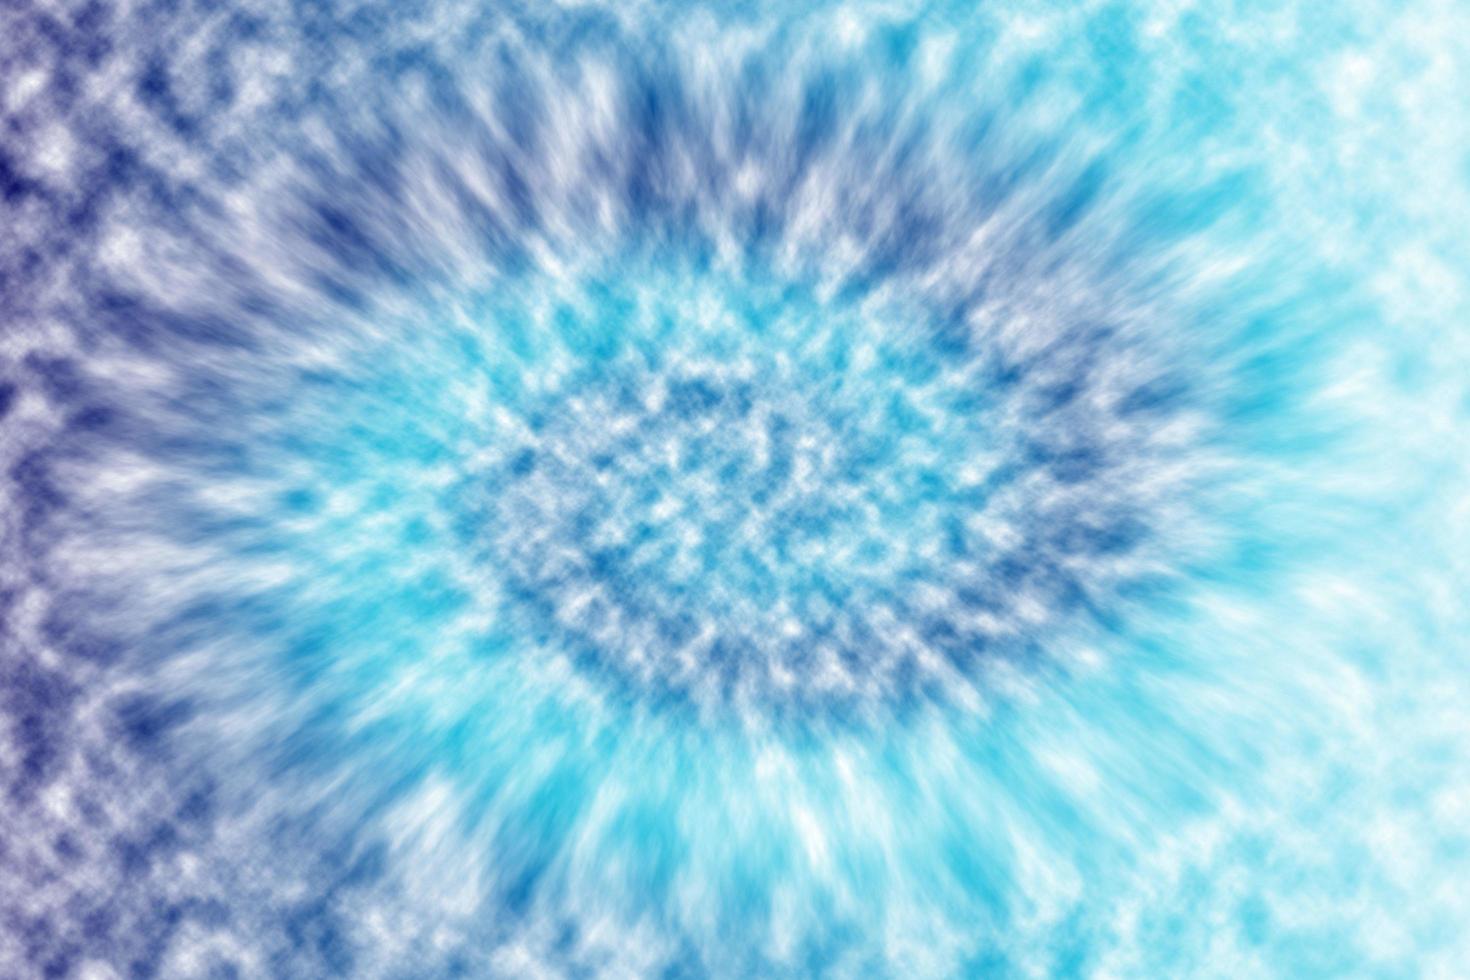 Abstract blue swirl background. Tie dye pattern. photo